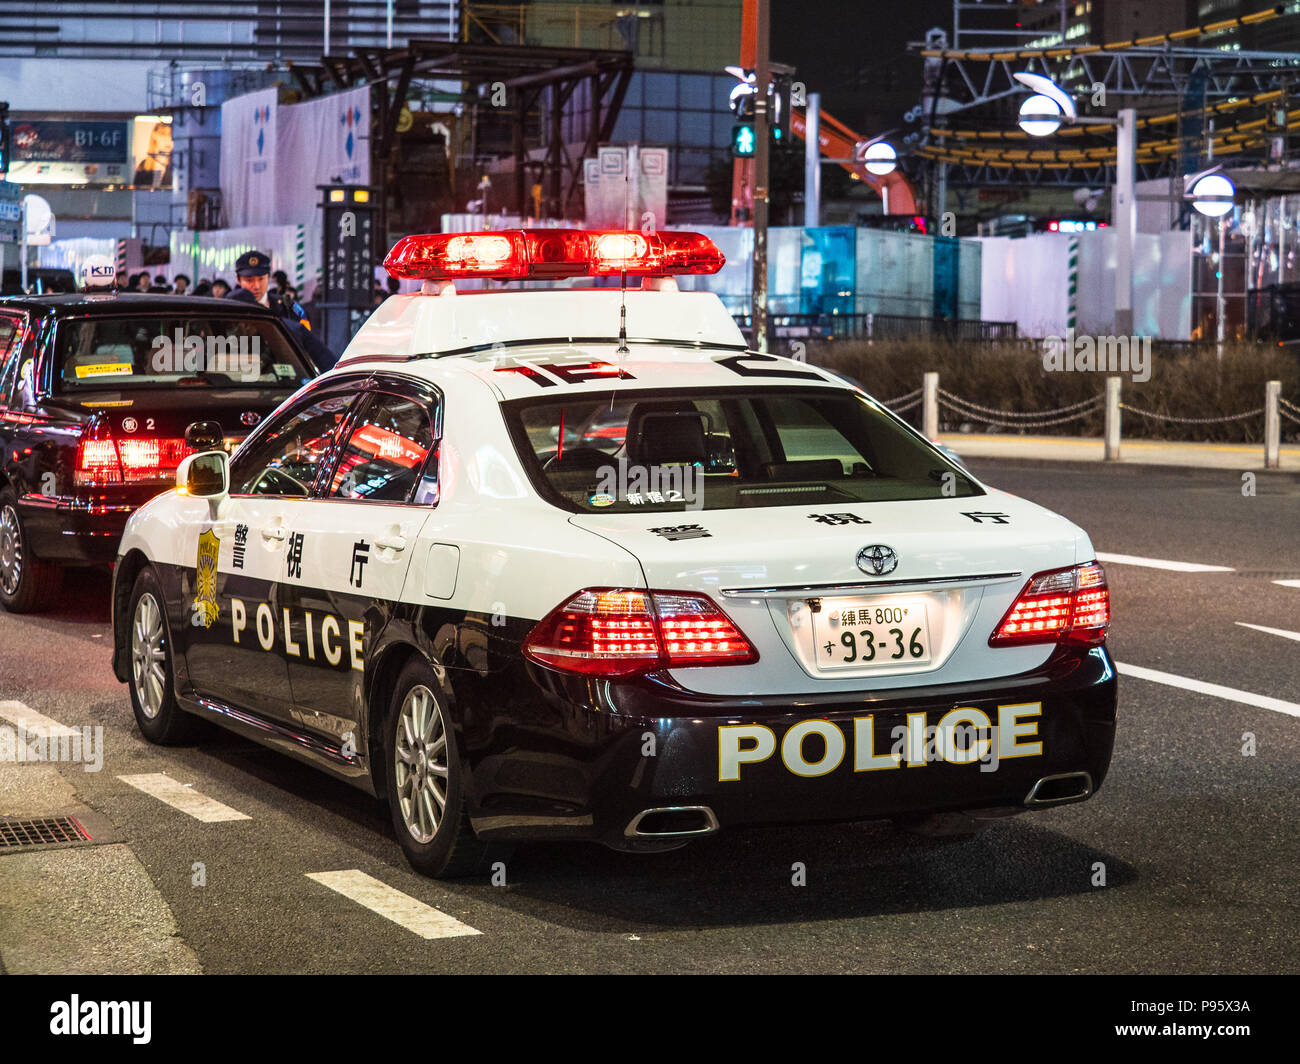 Tokyo Police Car pulls over a Tokyo Taxi. Tokyo Police Patrol Car. Tokyo Police Stop. Stock Photo